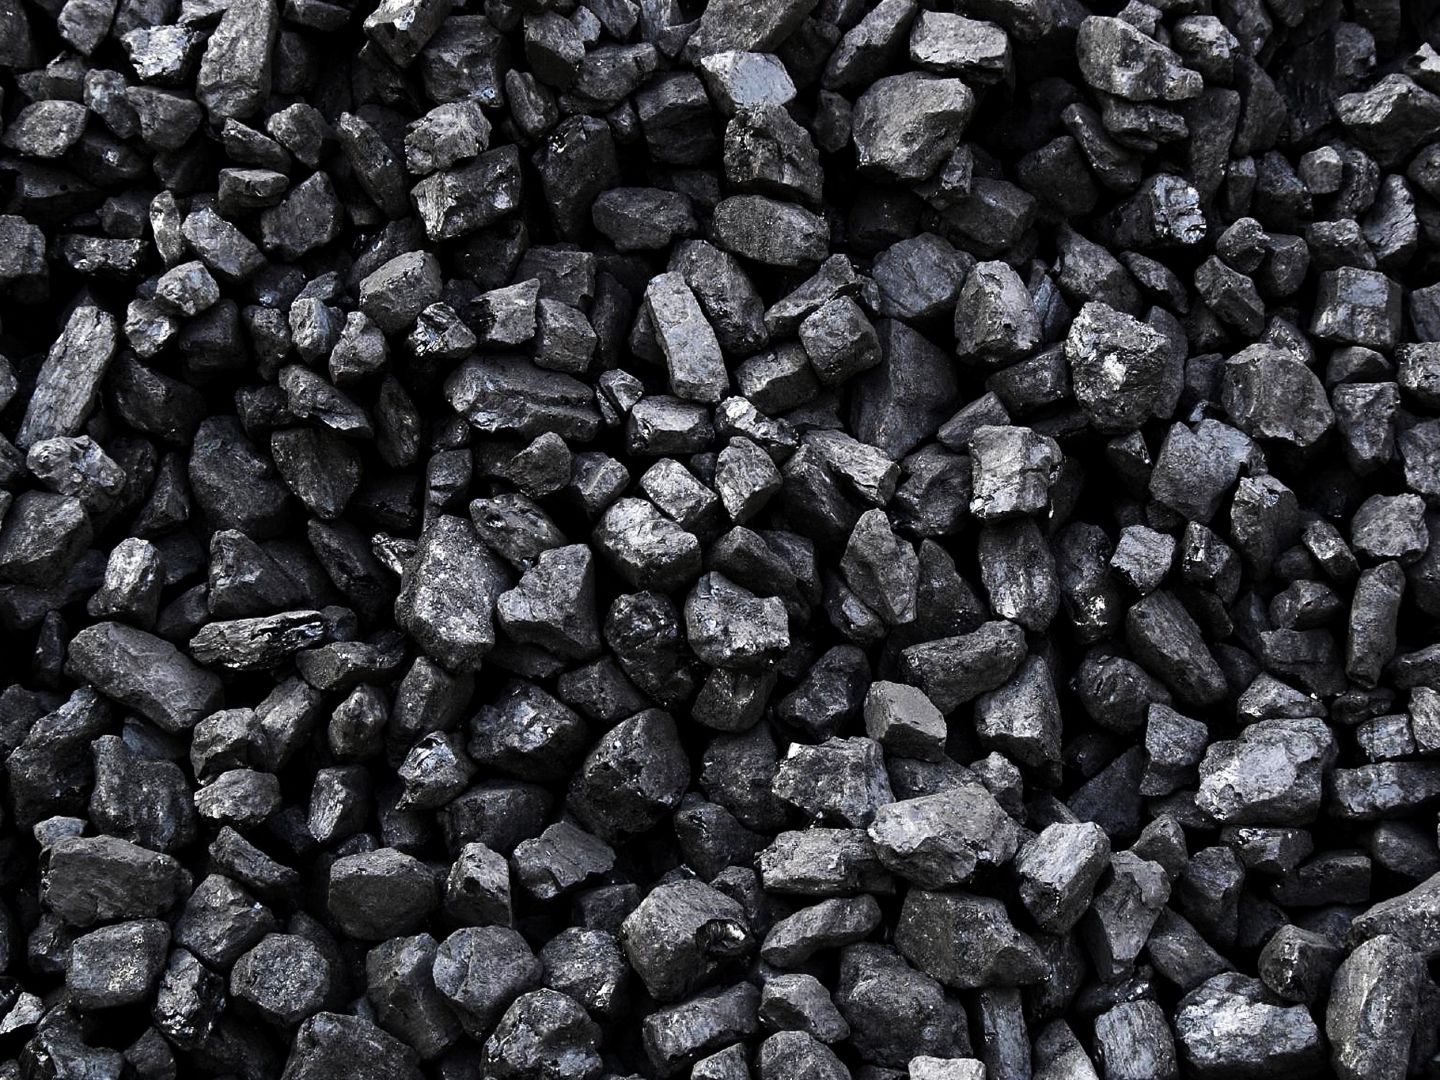 Poptávka na černé uhlí kostka (Uhlí) - Havlíčkův Brod